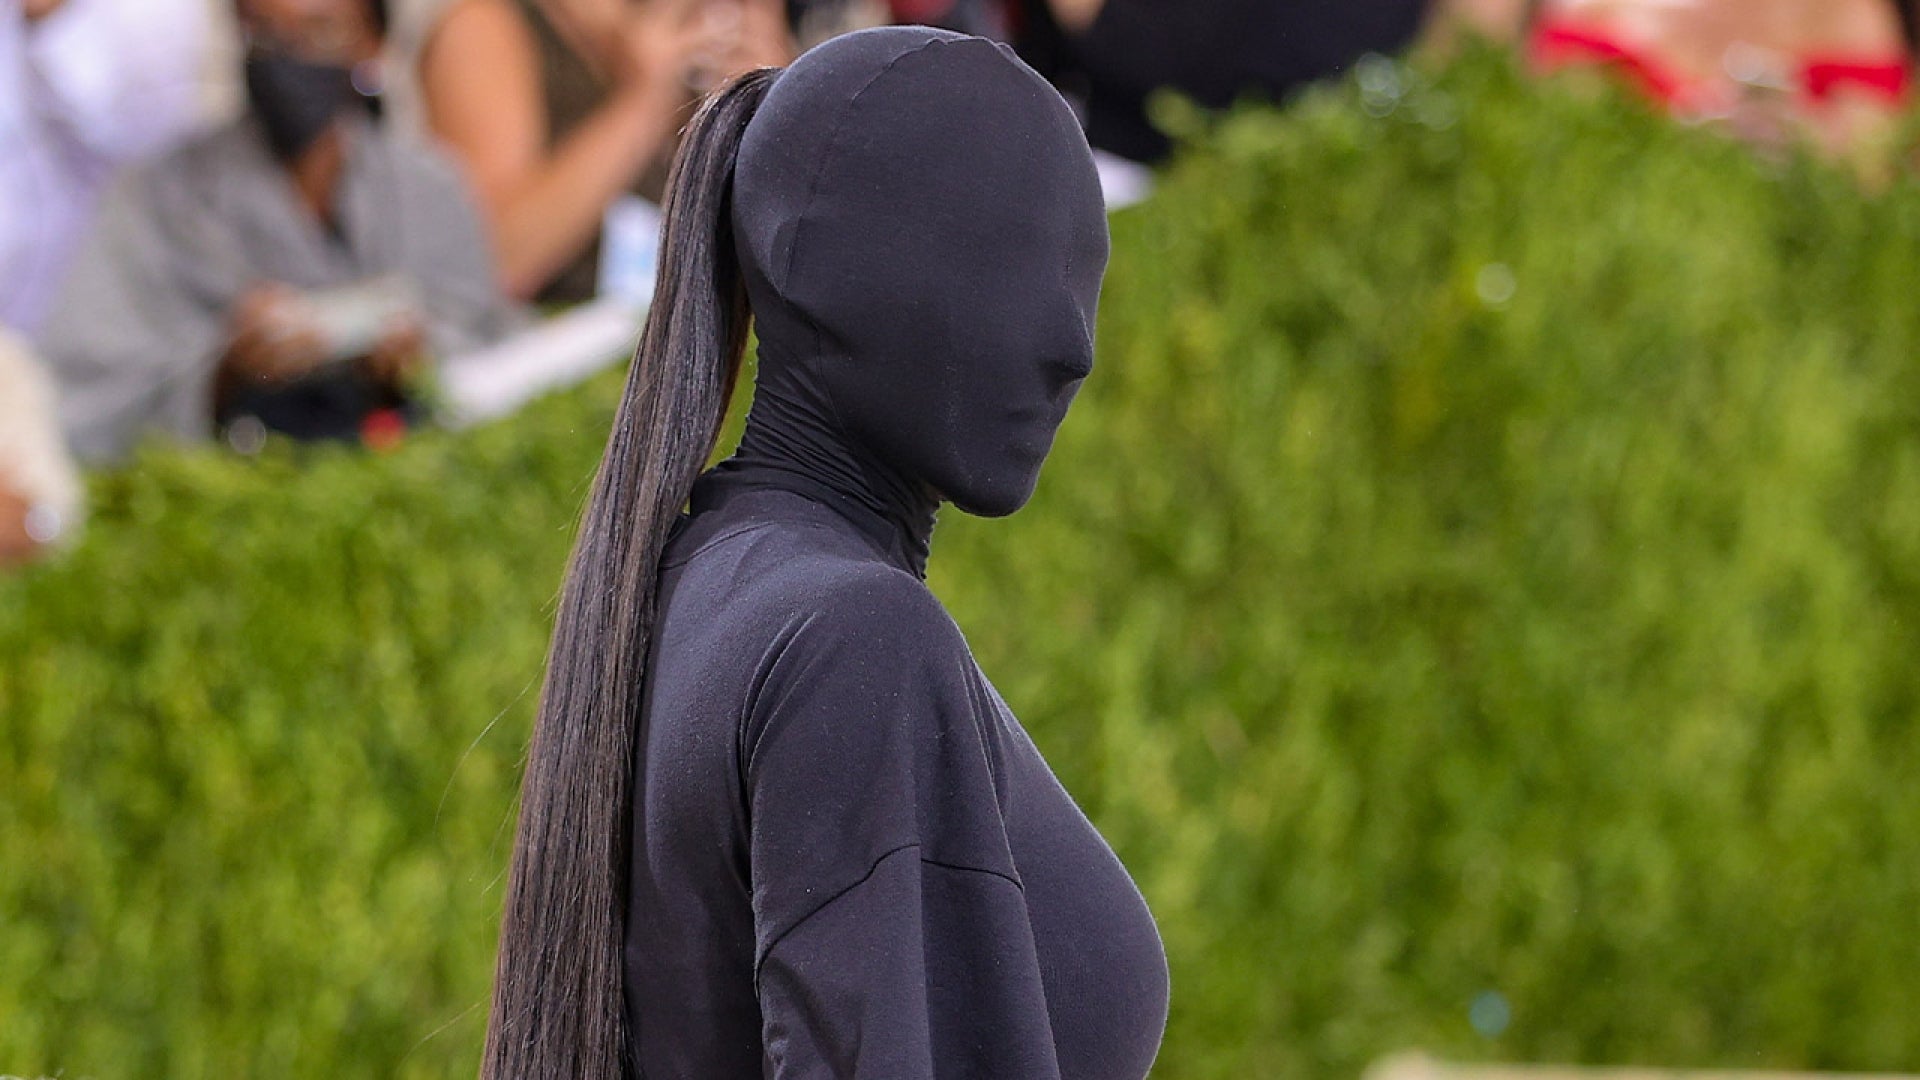 Kim Kardashian Channels Her Met Gala Look, Without the Mask, During a CVS  Run: Photo 4626826, Kim Kardashian Photos